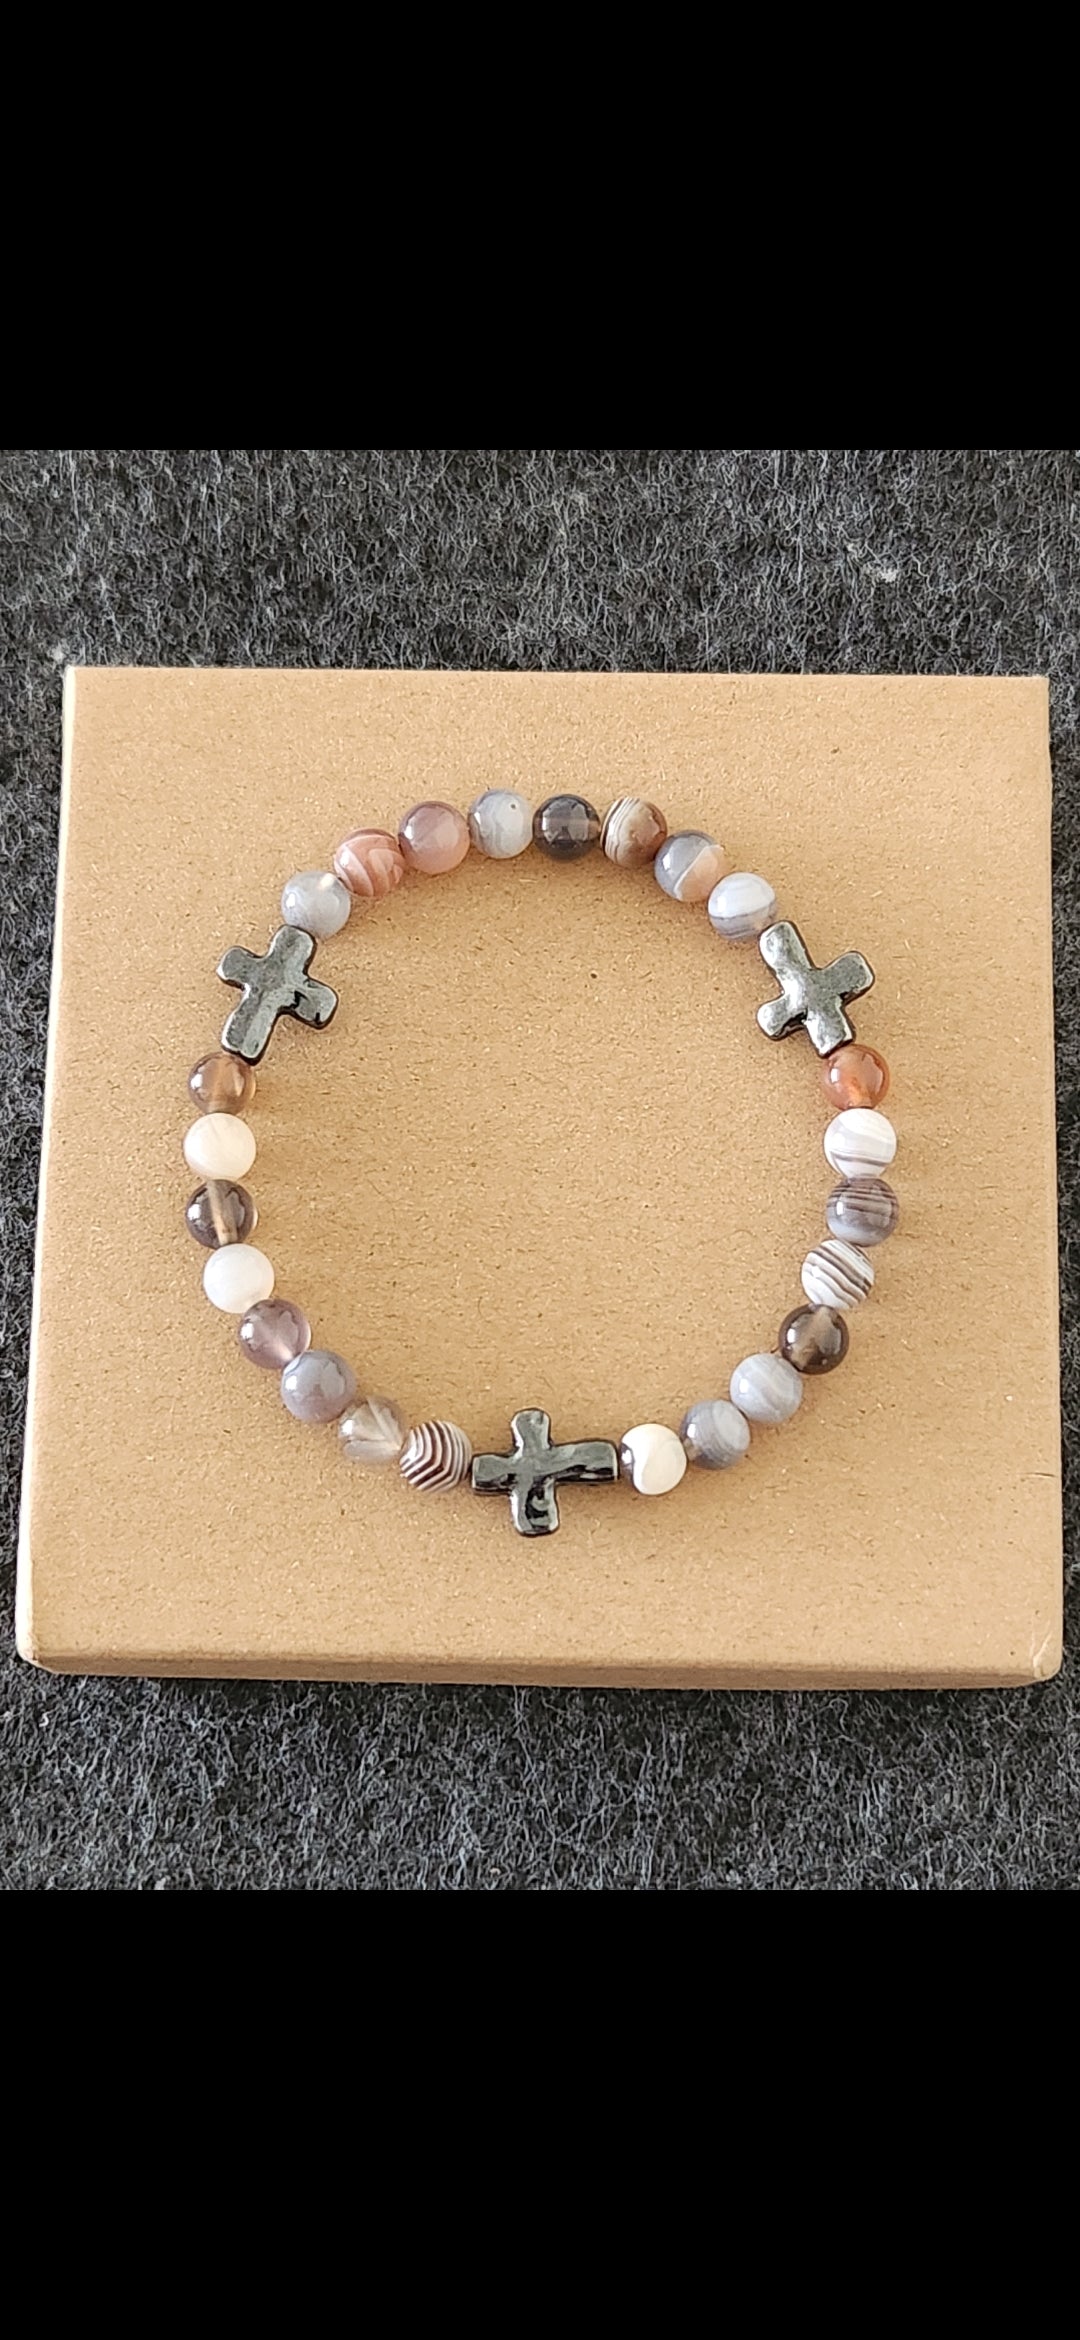 Botswana Sardonyx Agate Stone with Cross, bracelet - religious - inner peace - comforting - loneliness